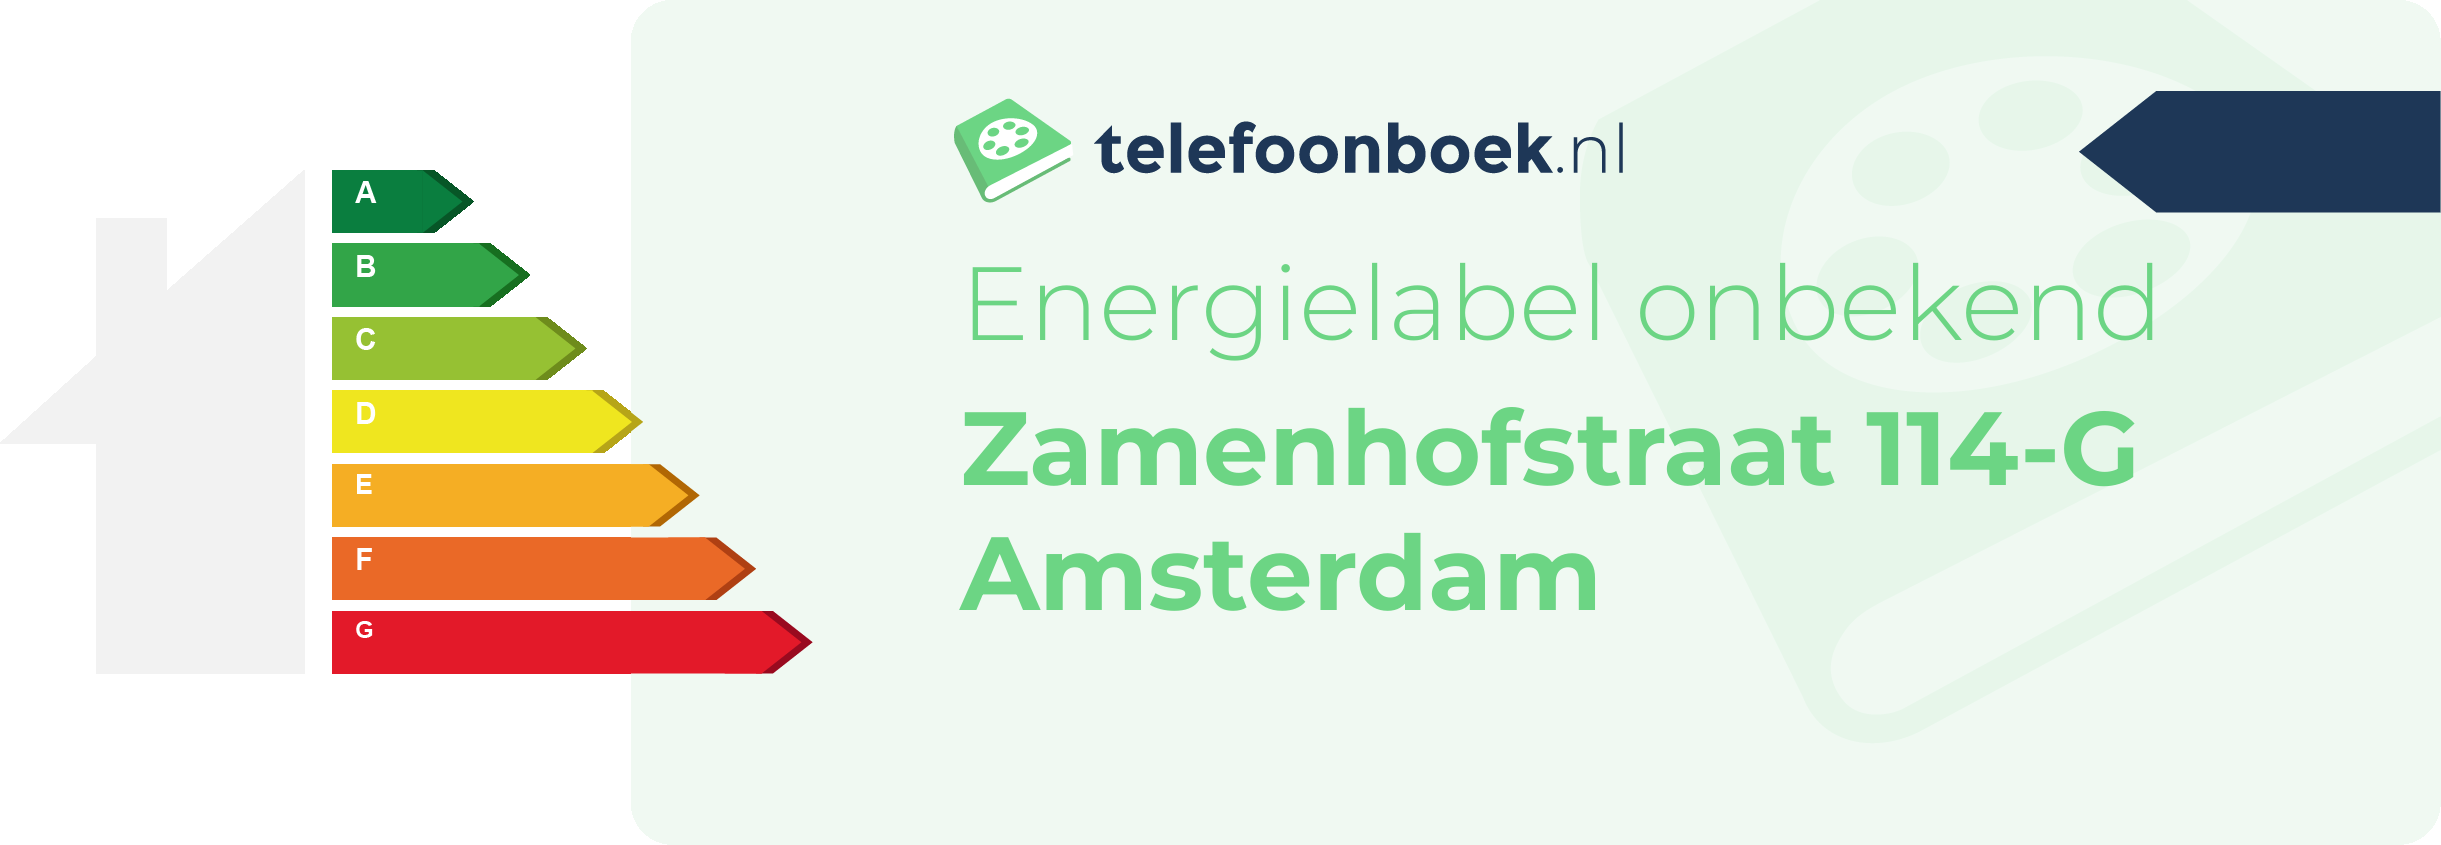 Energielabel Zamenhofstraat 114-G Amsterdam